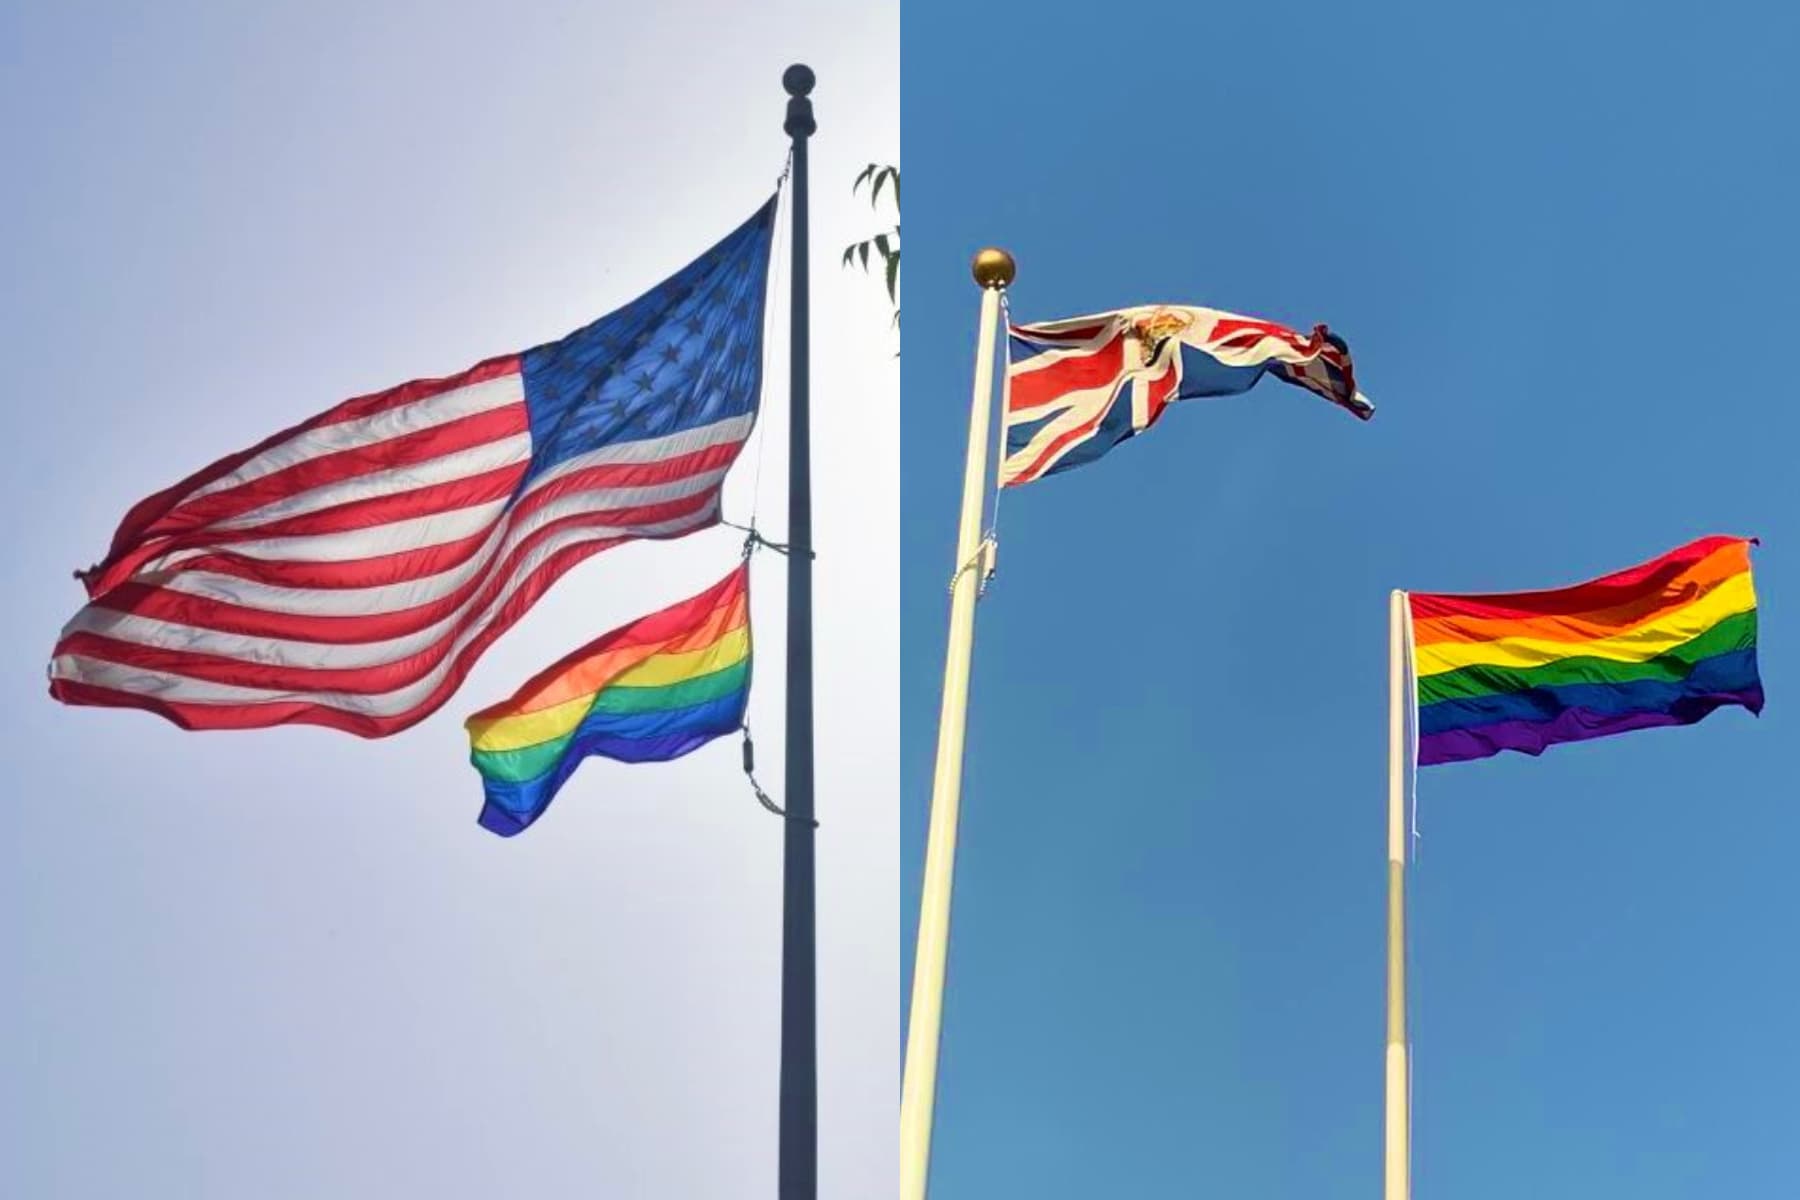 Us And Uk Embassies In The Uae Defiantly Fly Pride Flags In Historic Gesture